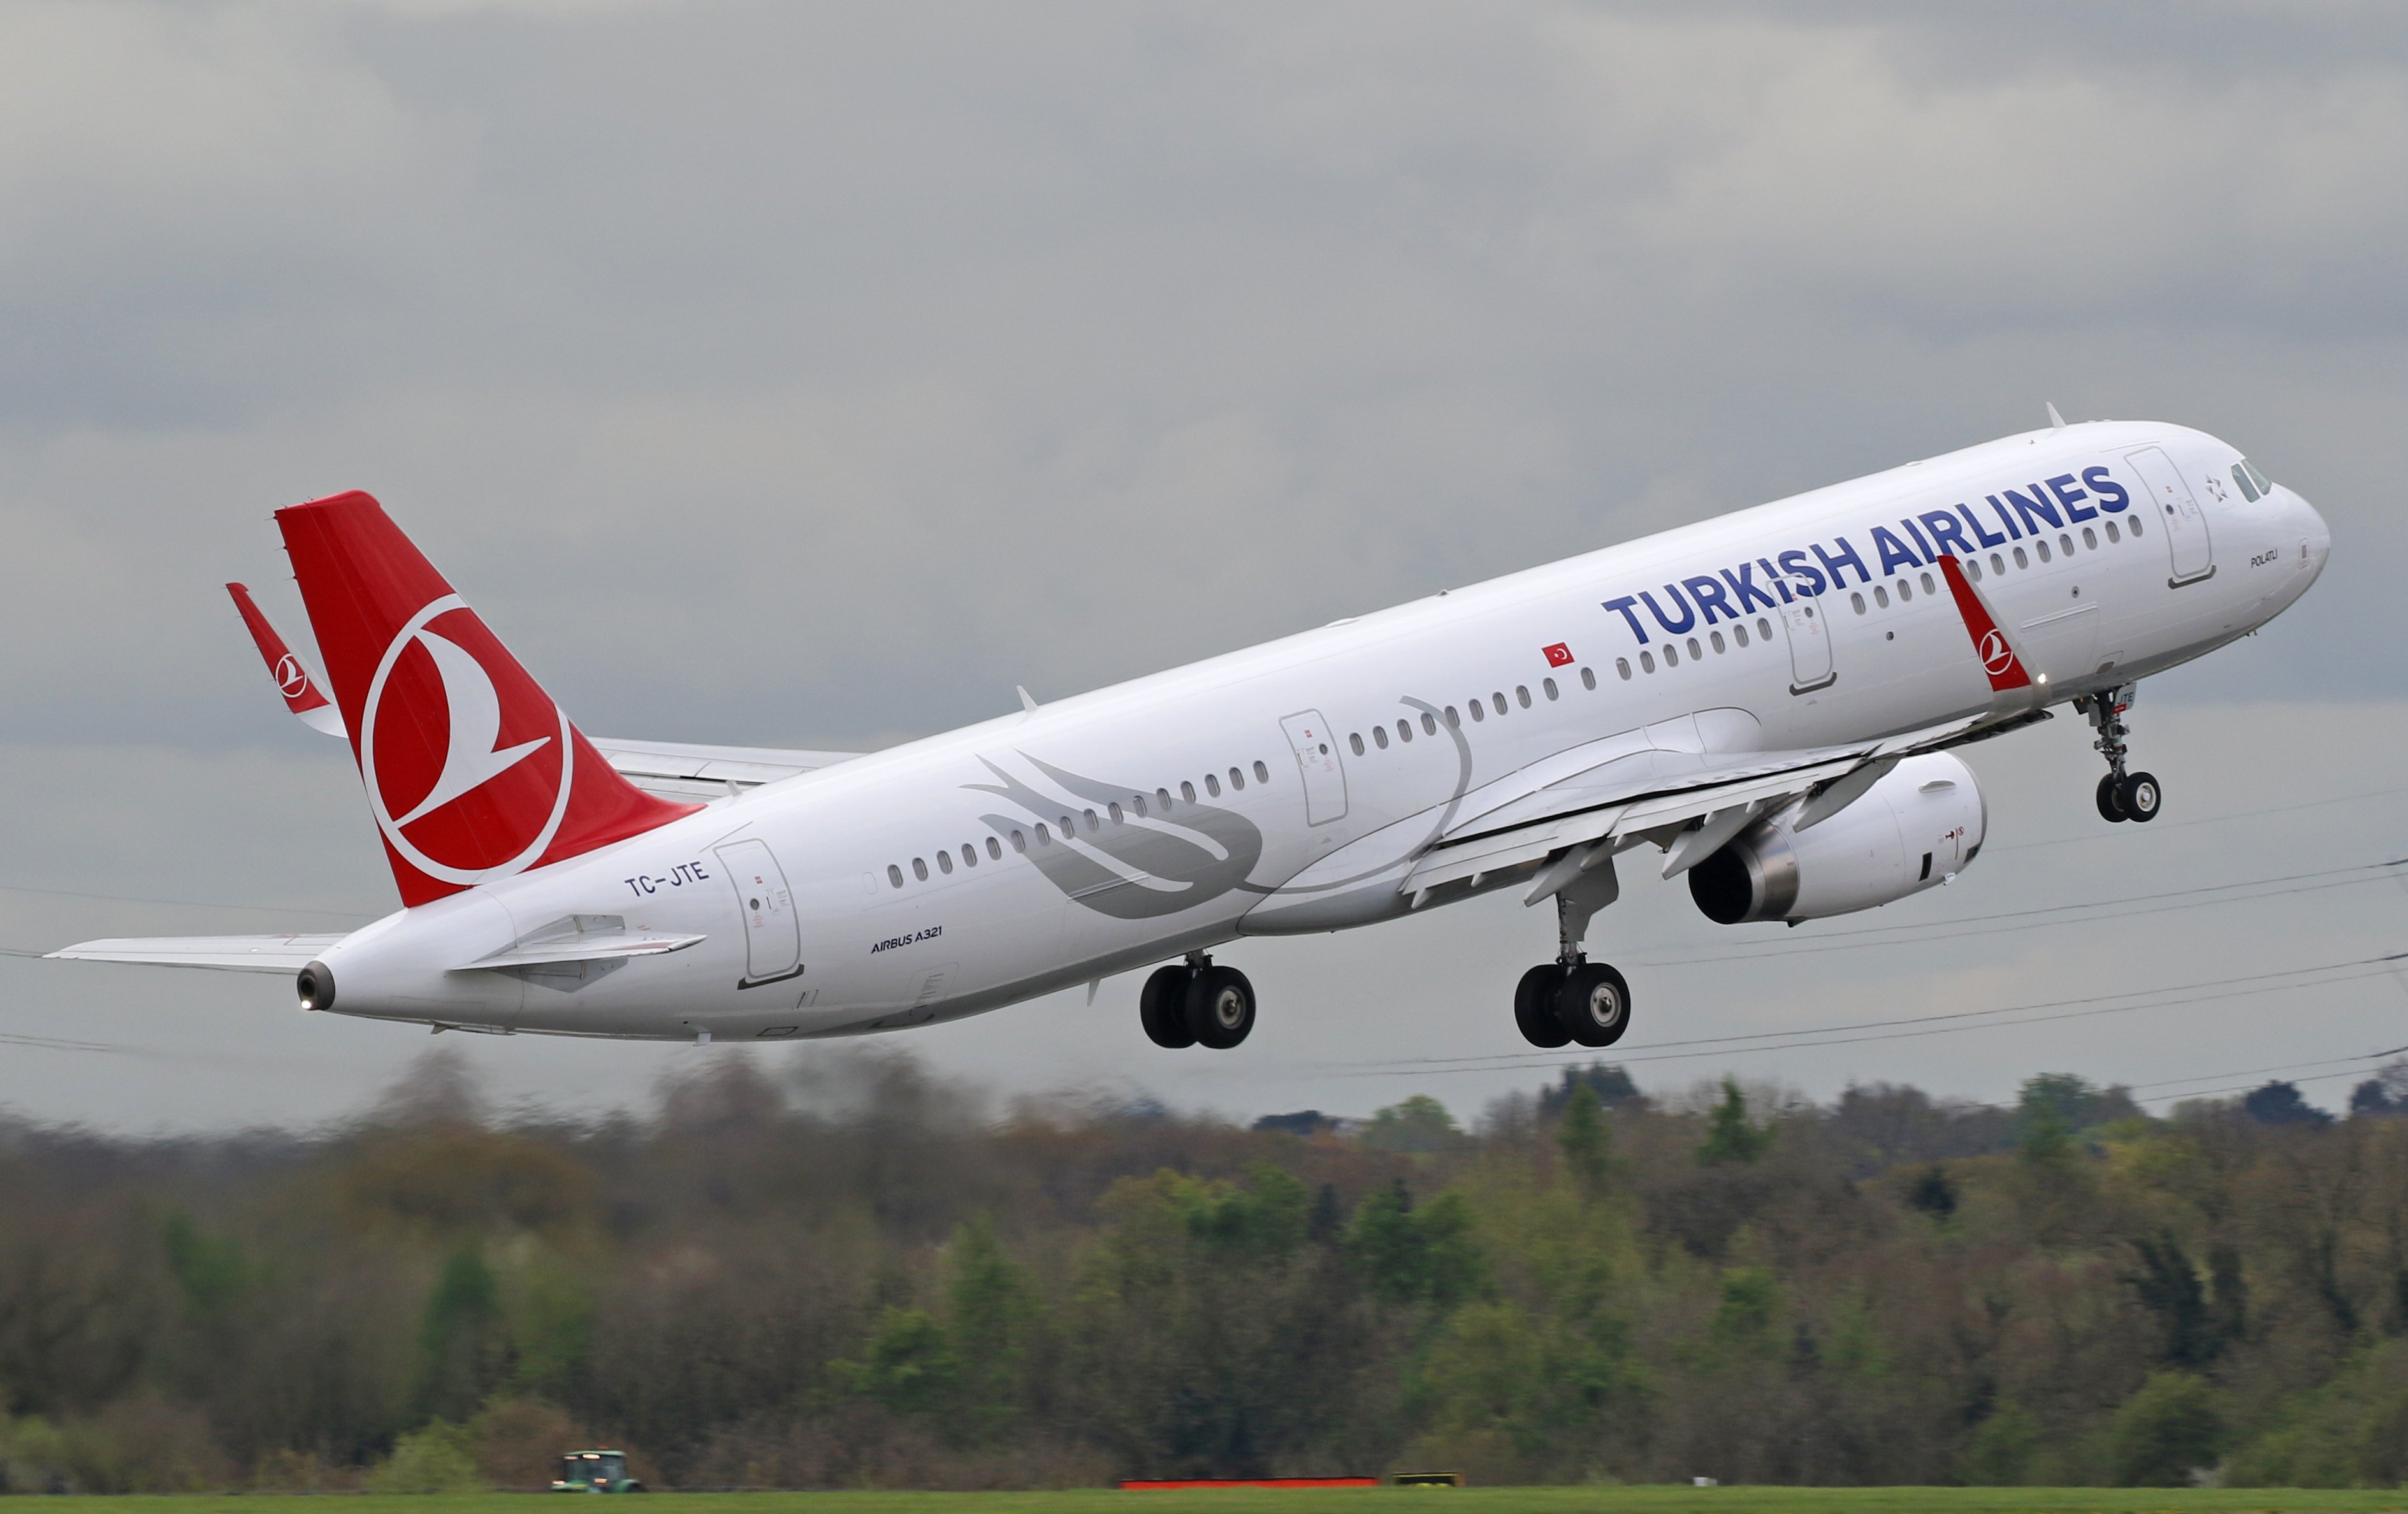 Туркиш эйрлайнс отзывы. Airbus a321 Туркиш Эйрлайнс. Аэробус а321 Turkish Airlines. Turkish Airlines Airbus a321 узкофюзеляжный. А321 231 Туркиш Эйрлайнс.